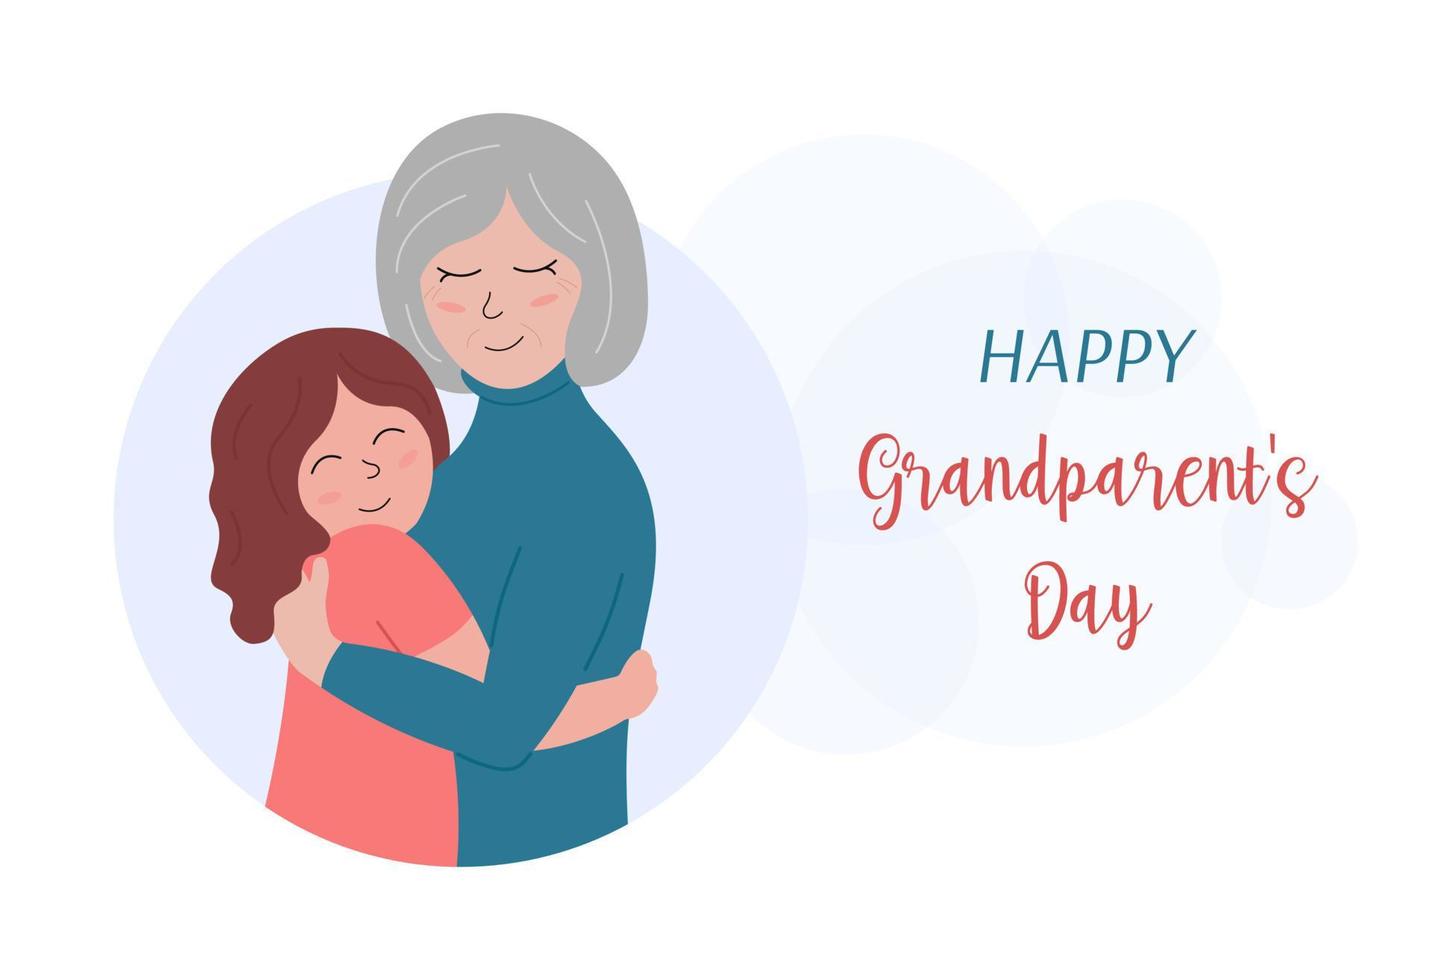 Grandparents Day celebration. Grandmother and granddaughter hug. Smiling granny and little girl together. Happy Grandparents Day greeting card, banner, poster. Flat vector illustration